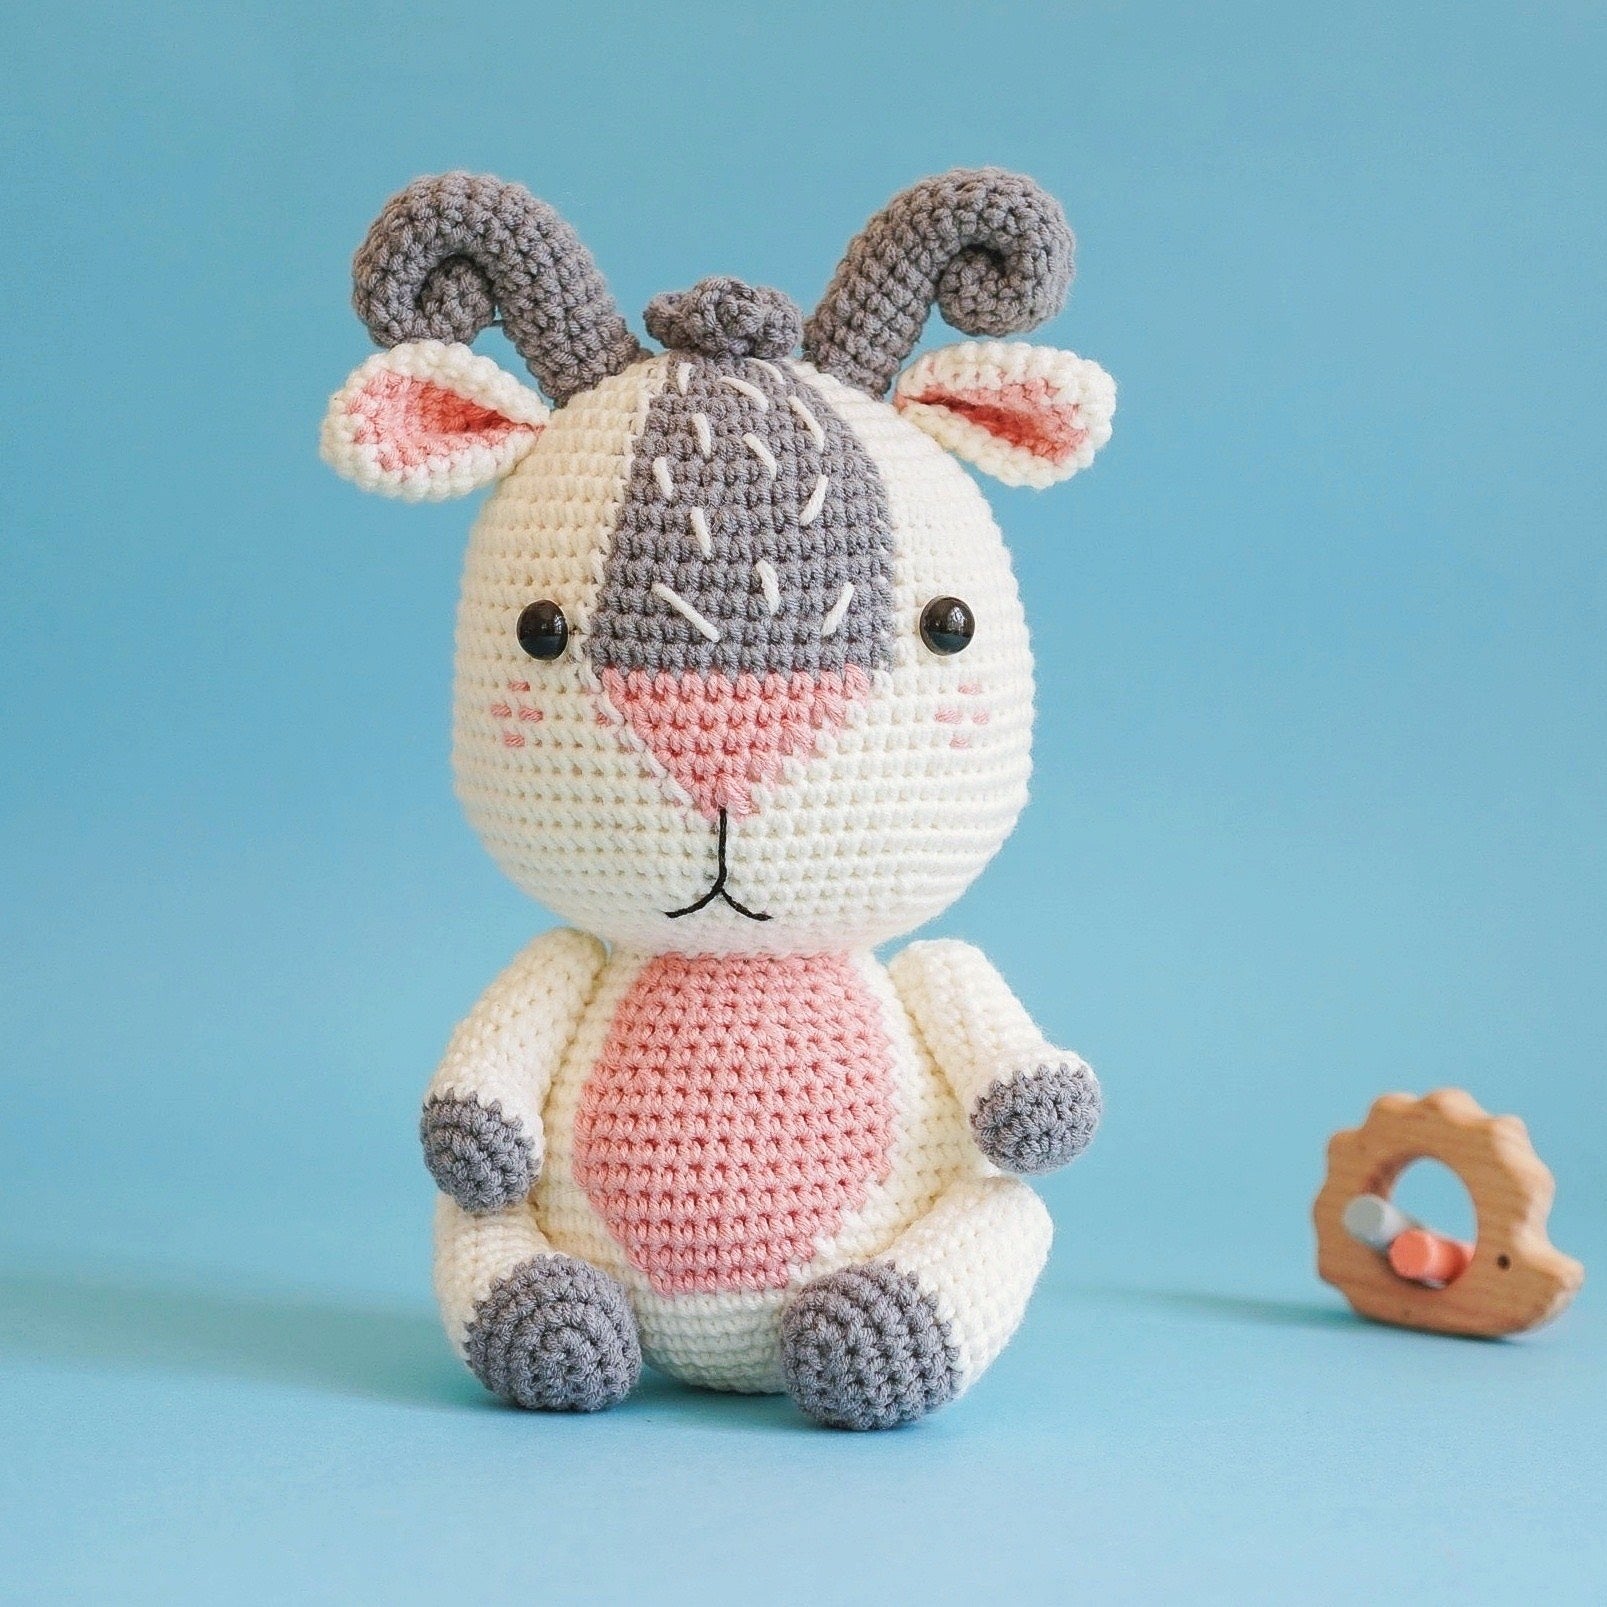 Gigi The Goat Crochet Pattern by Aquariwool Crochet (Crochet Doll Pattern/Amigurumi Pattern for Baby gift)